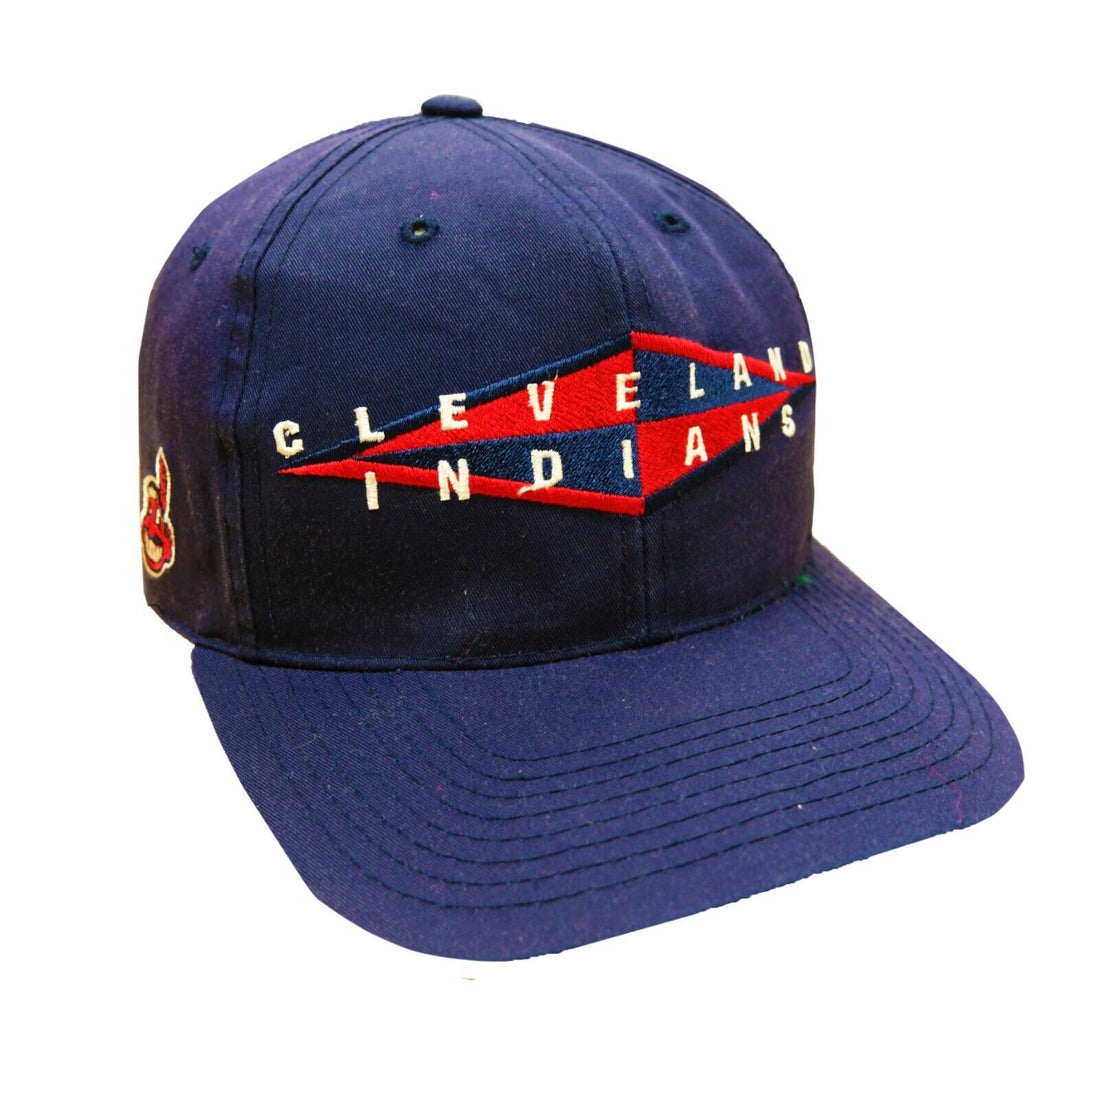 Vintage 90s Boston Bruins ANNCO ON FIRE Snapback Cap Hat